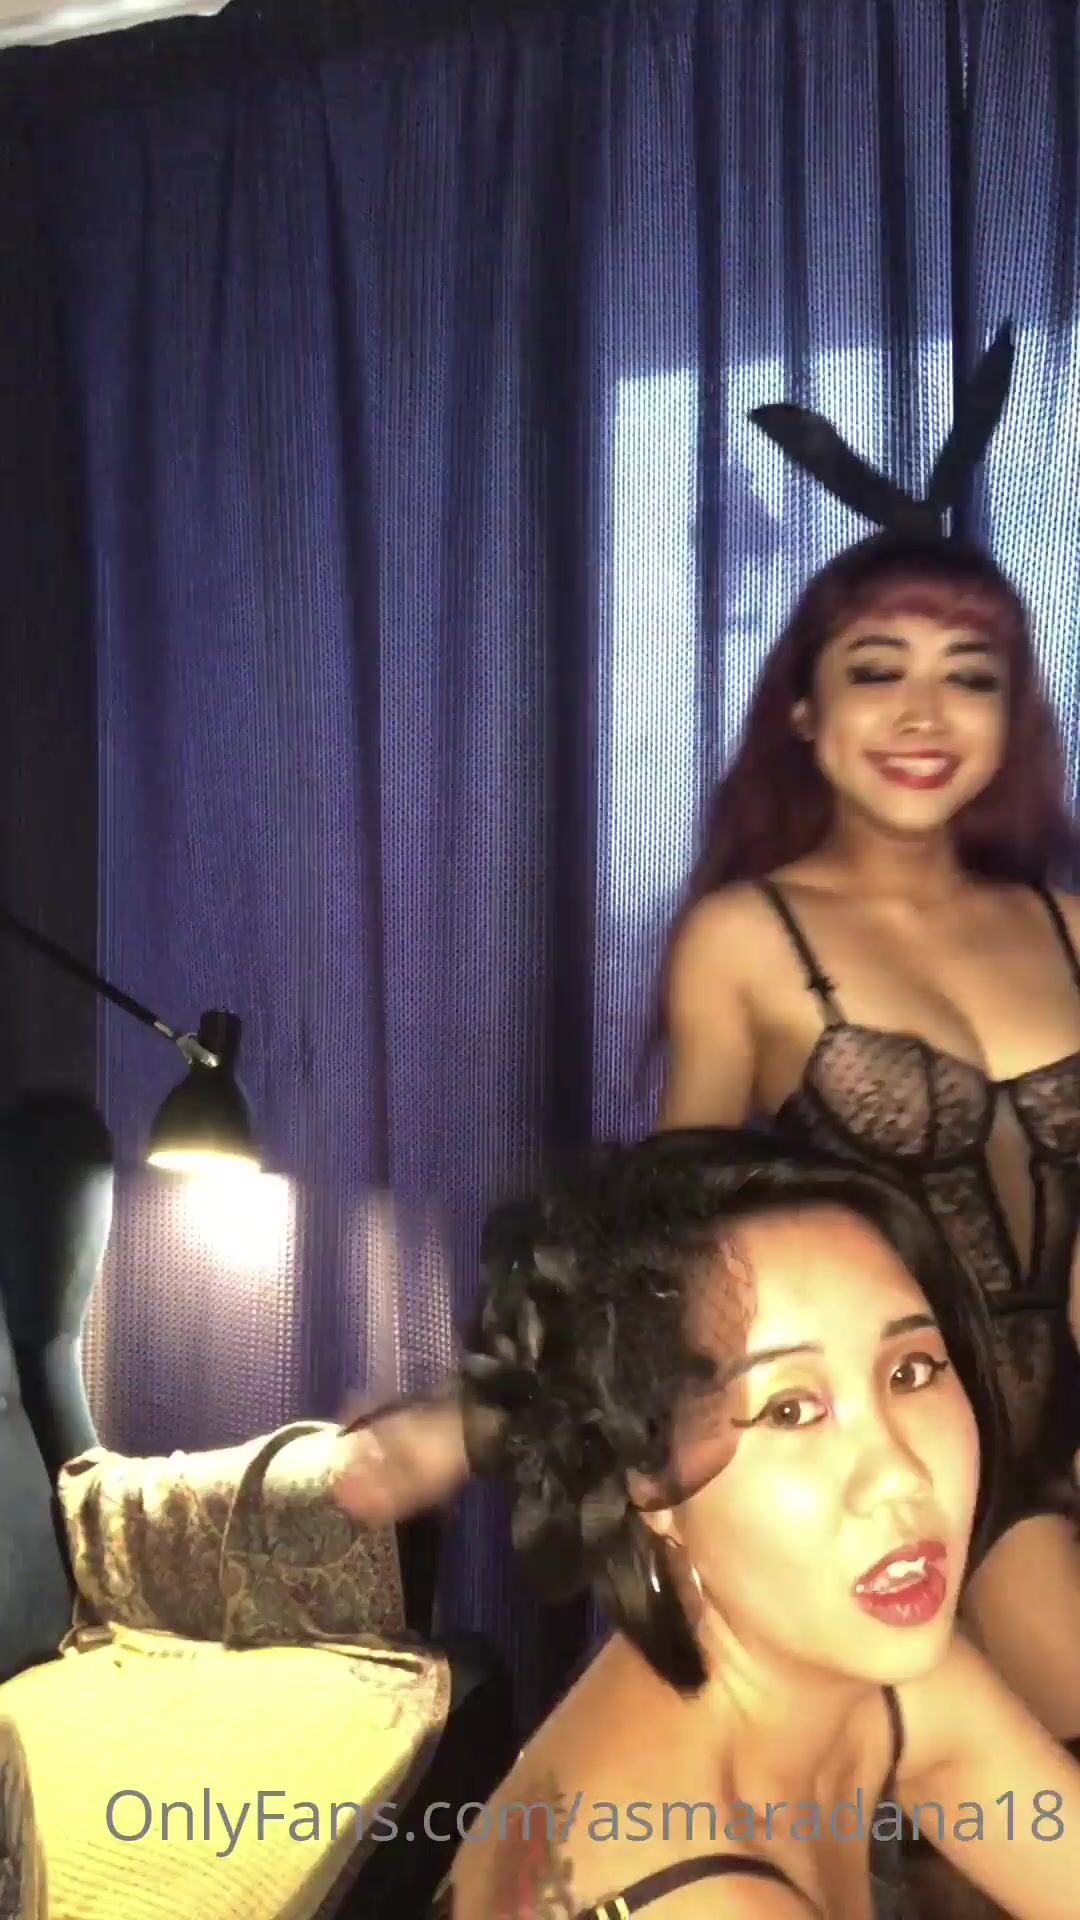 X Sexy Vdie6 - Theasmaradana Miss Dana X Miss Casandra Having Sexy Fun Time Together While  Having Our Slave Do